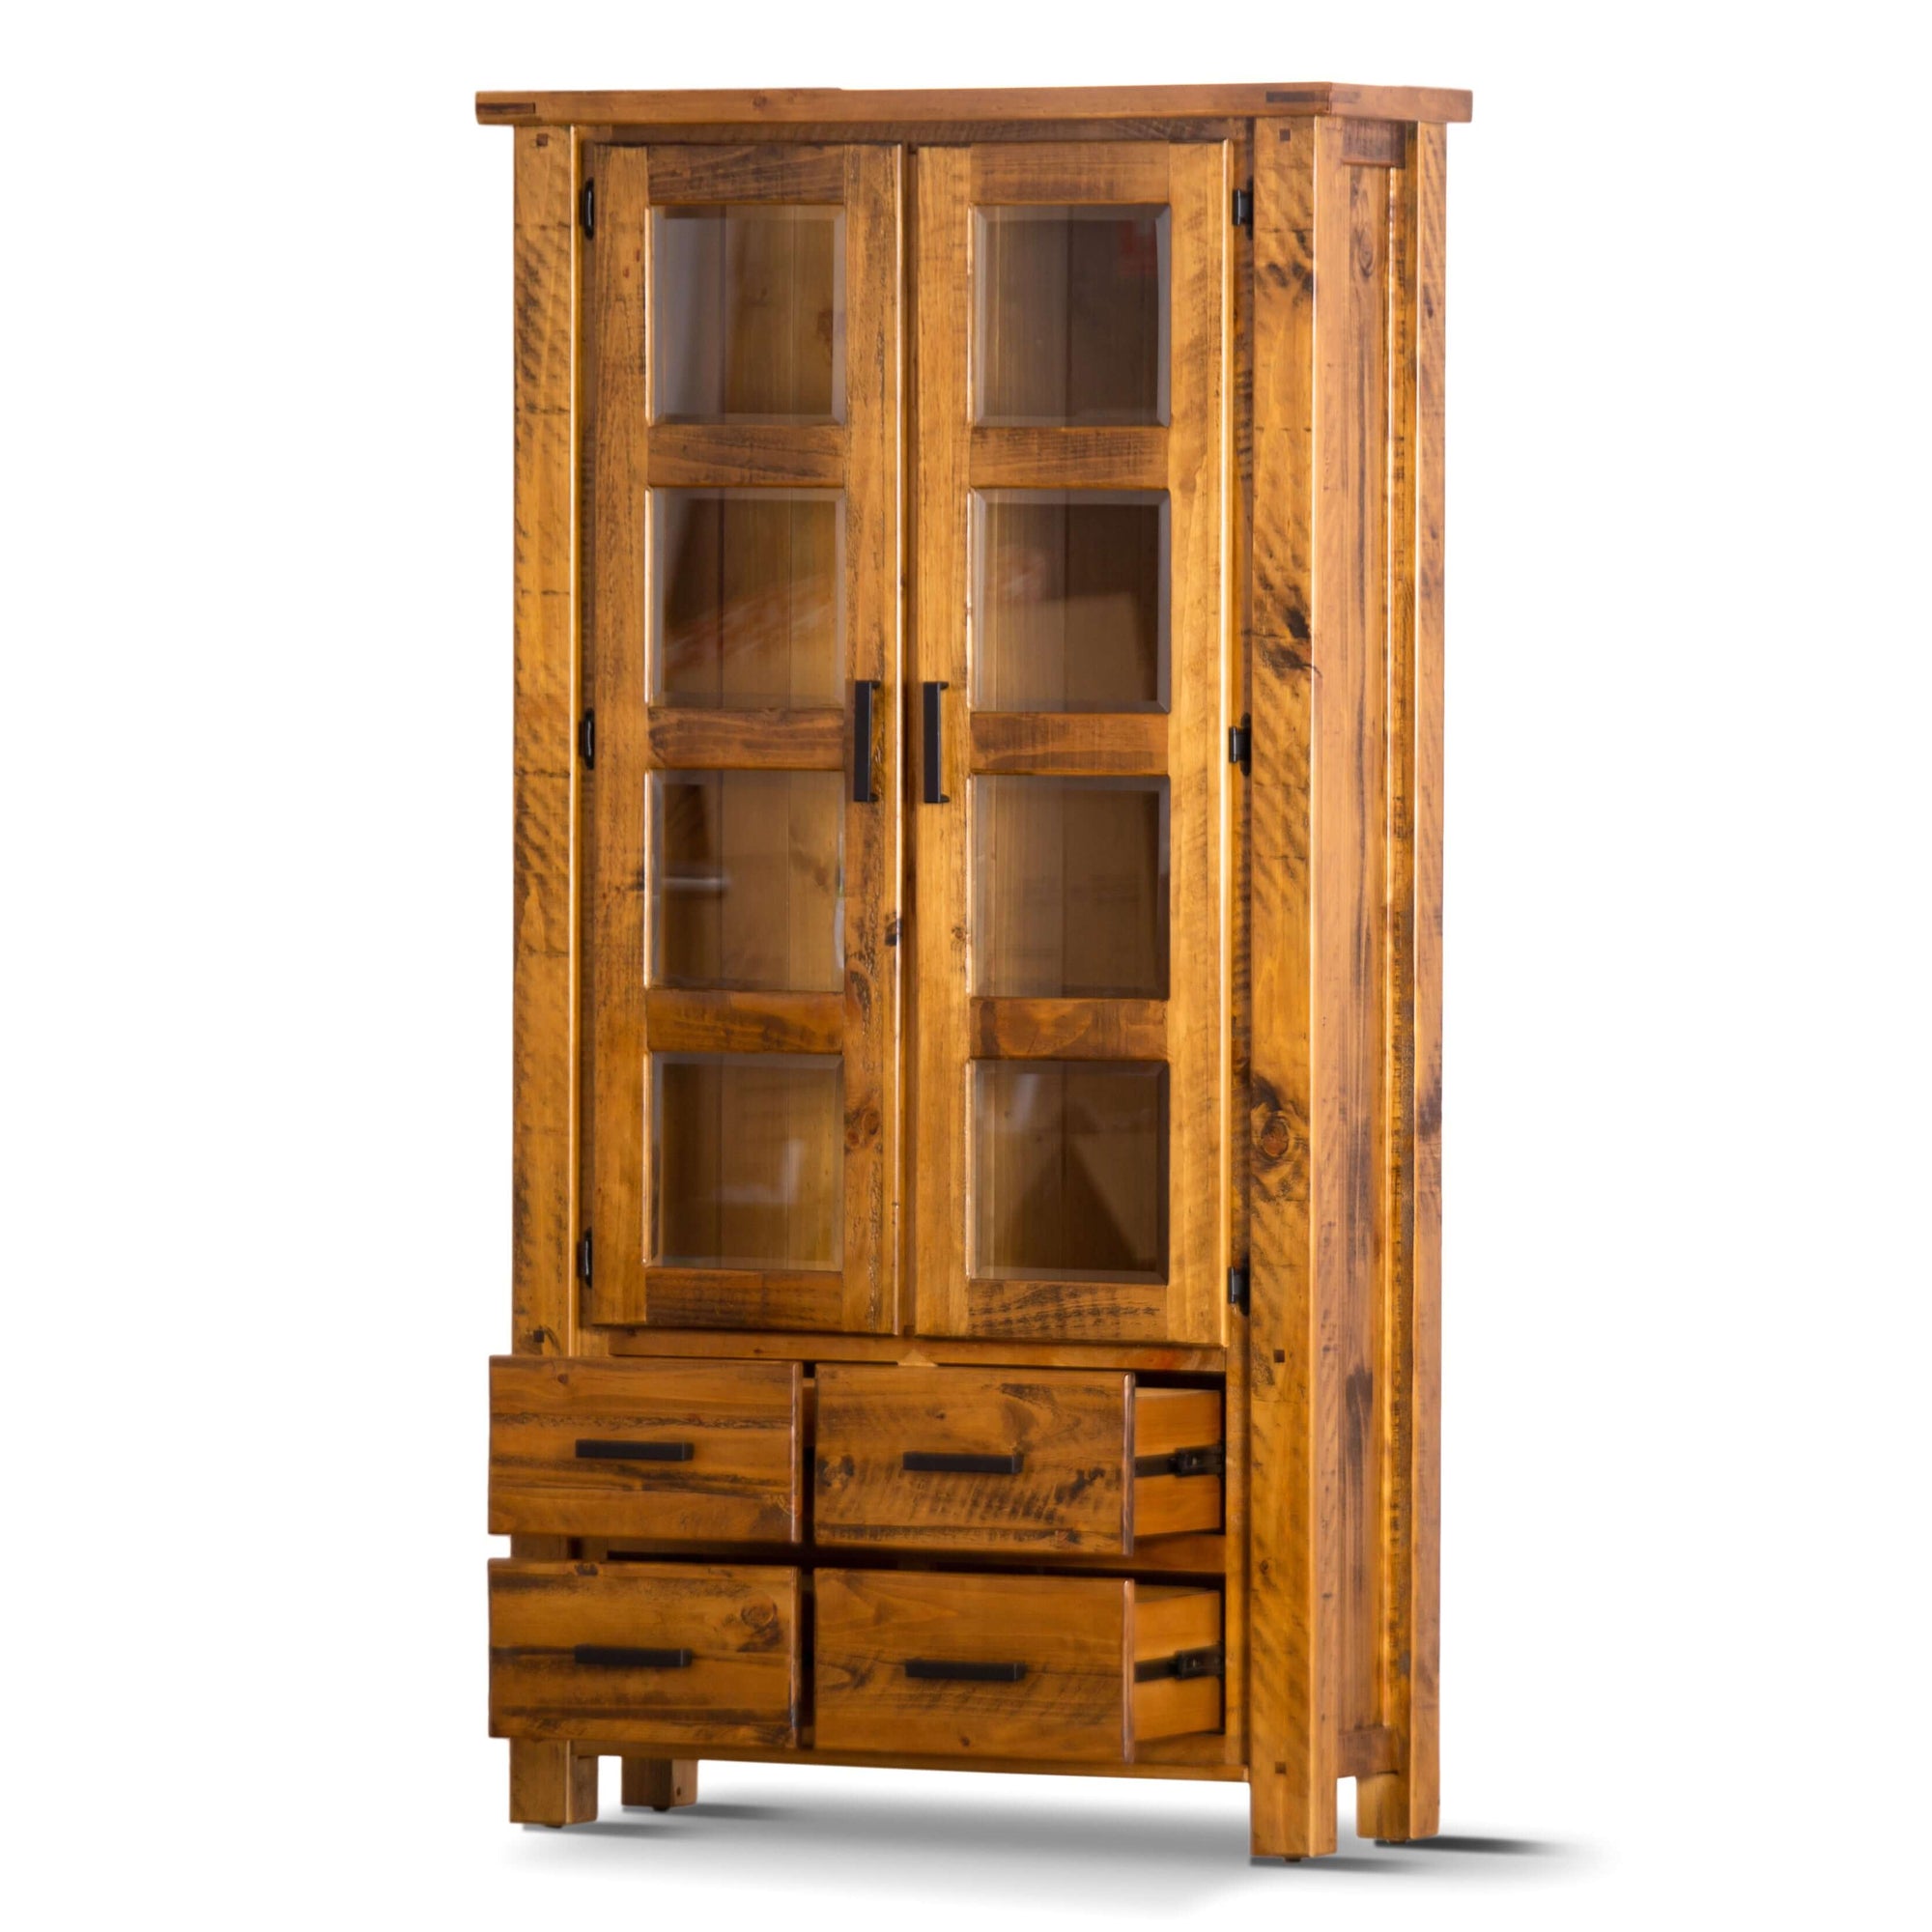 Teasel Display Unit Glass Door Bookcase Solid Pine Timber Wood - Rustic Oak-Upinteriors